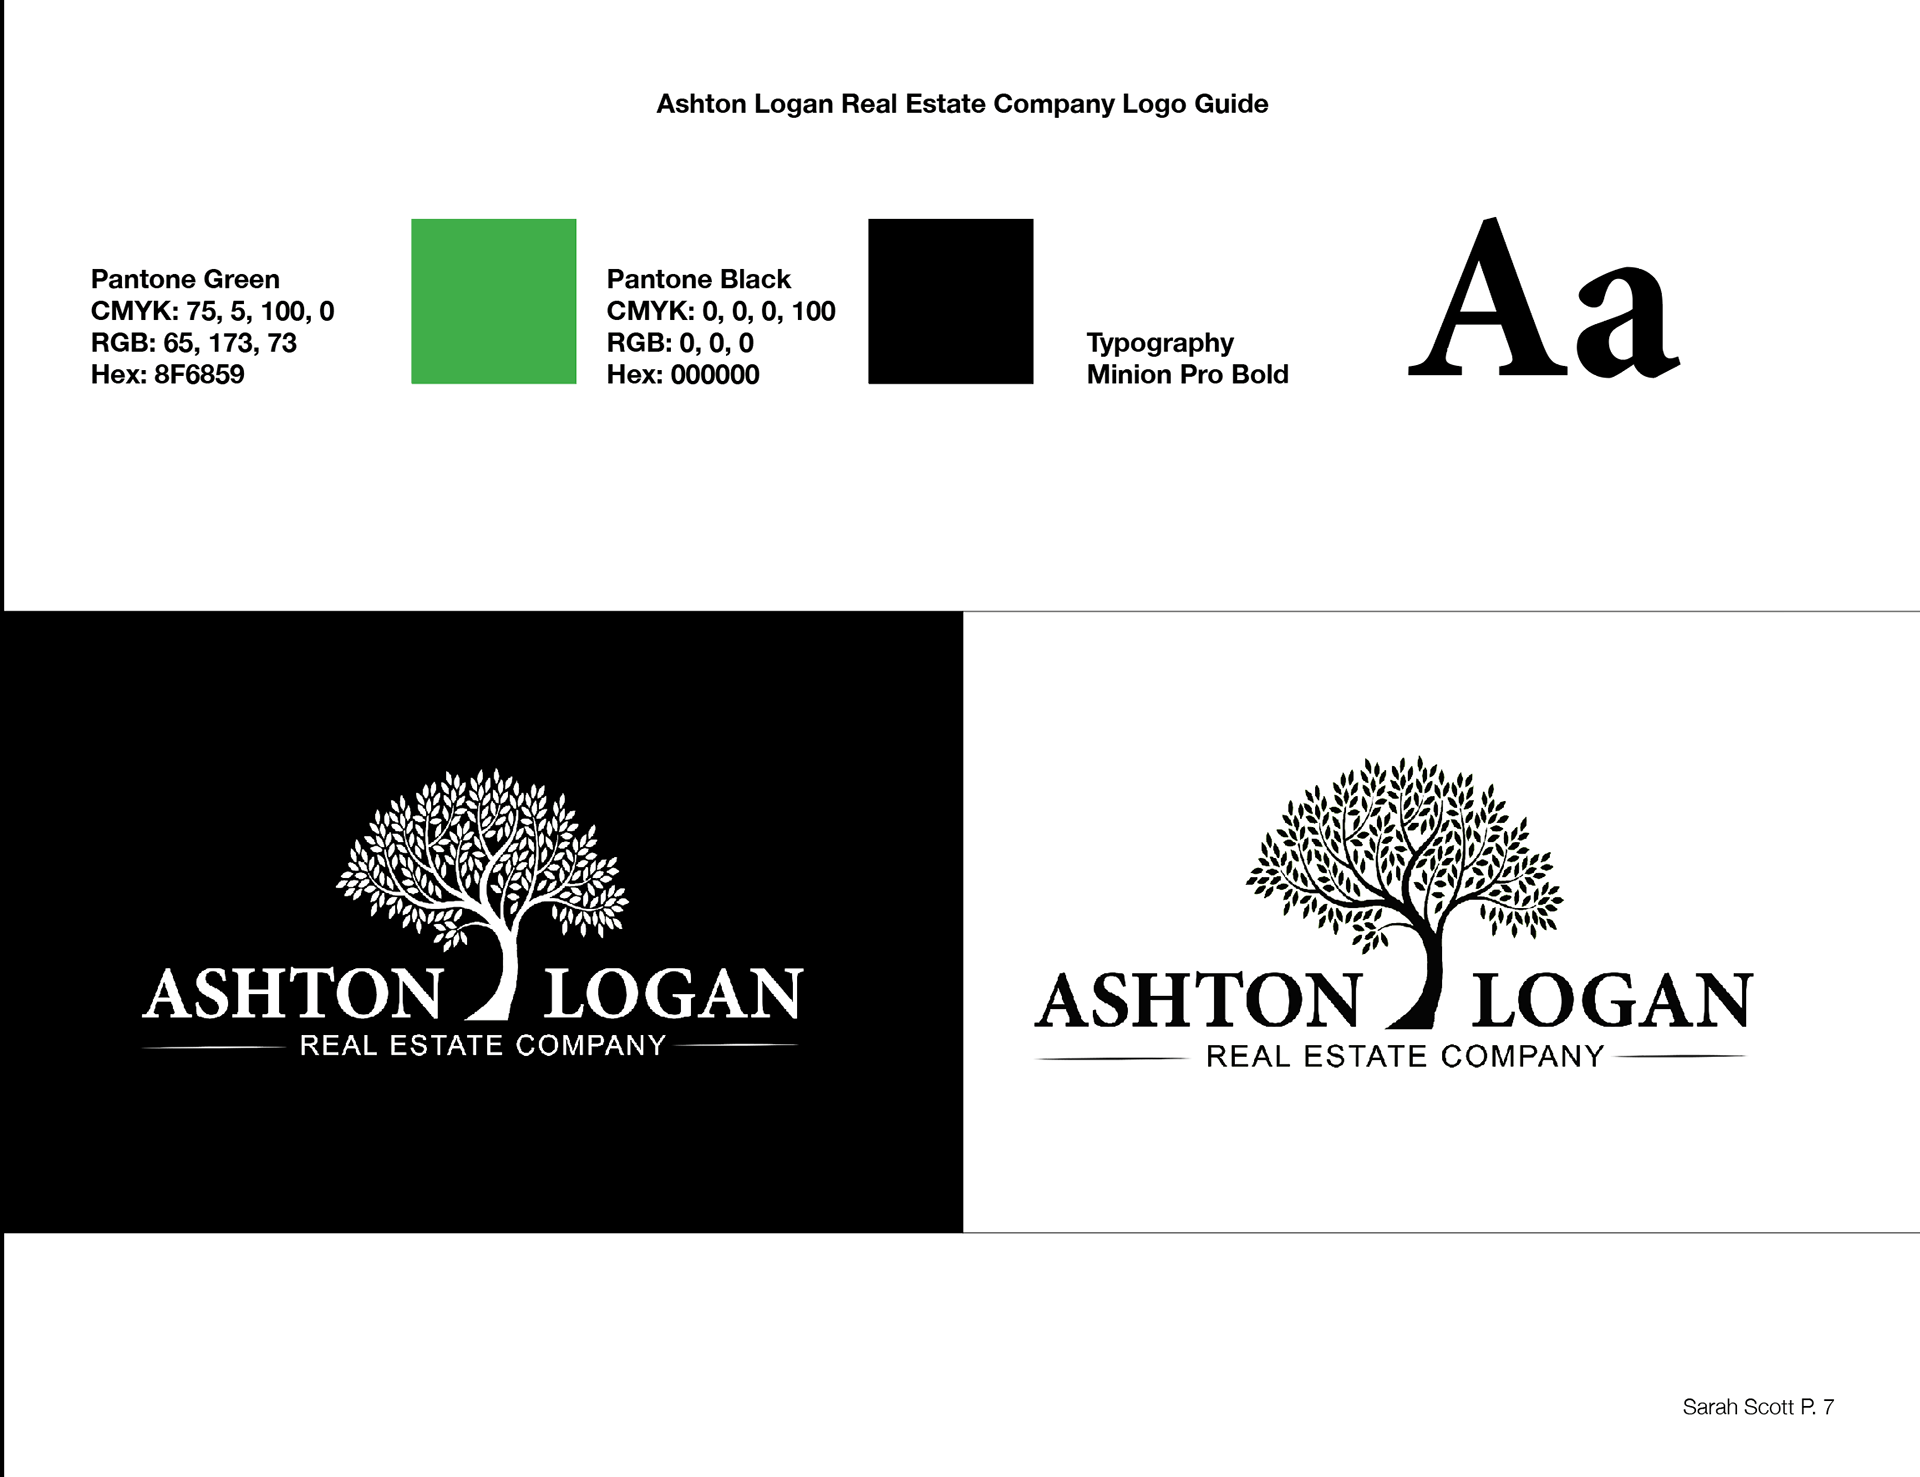 Ashton Company Logo - Sarah Scott - Ashton Logan Real Estate